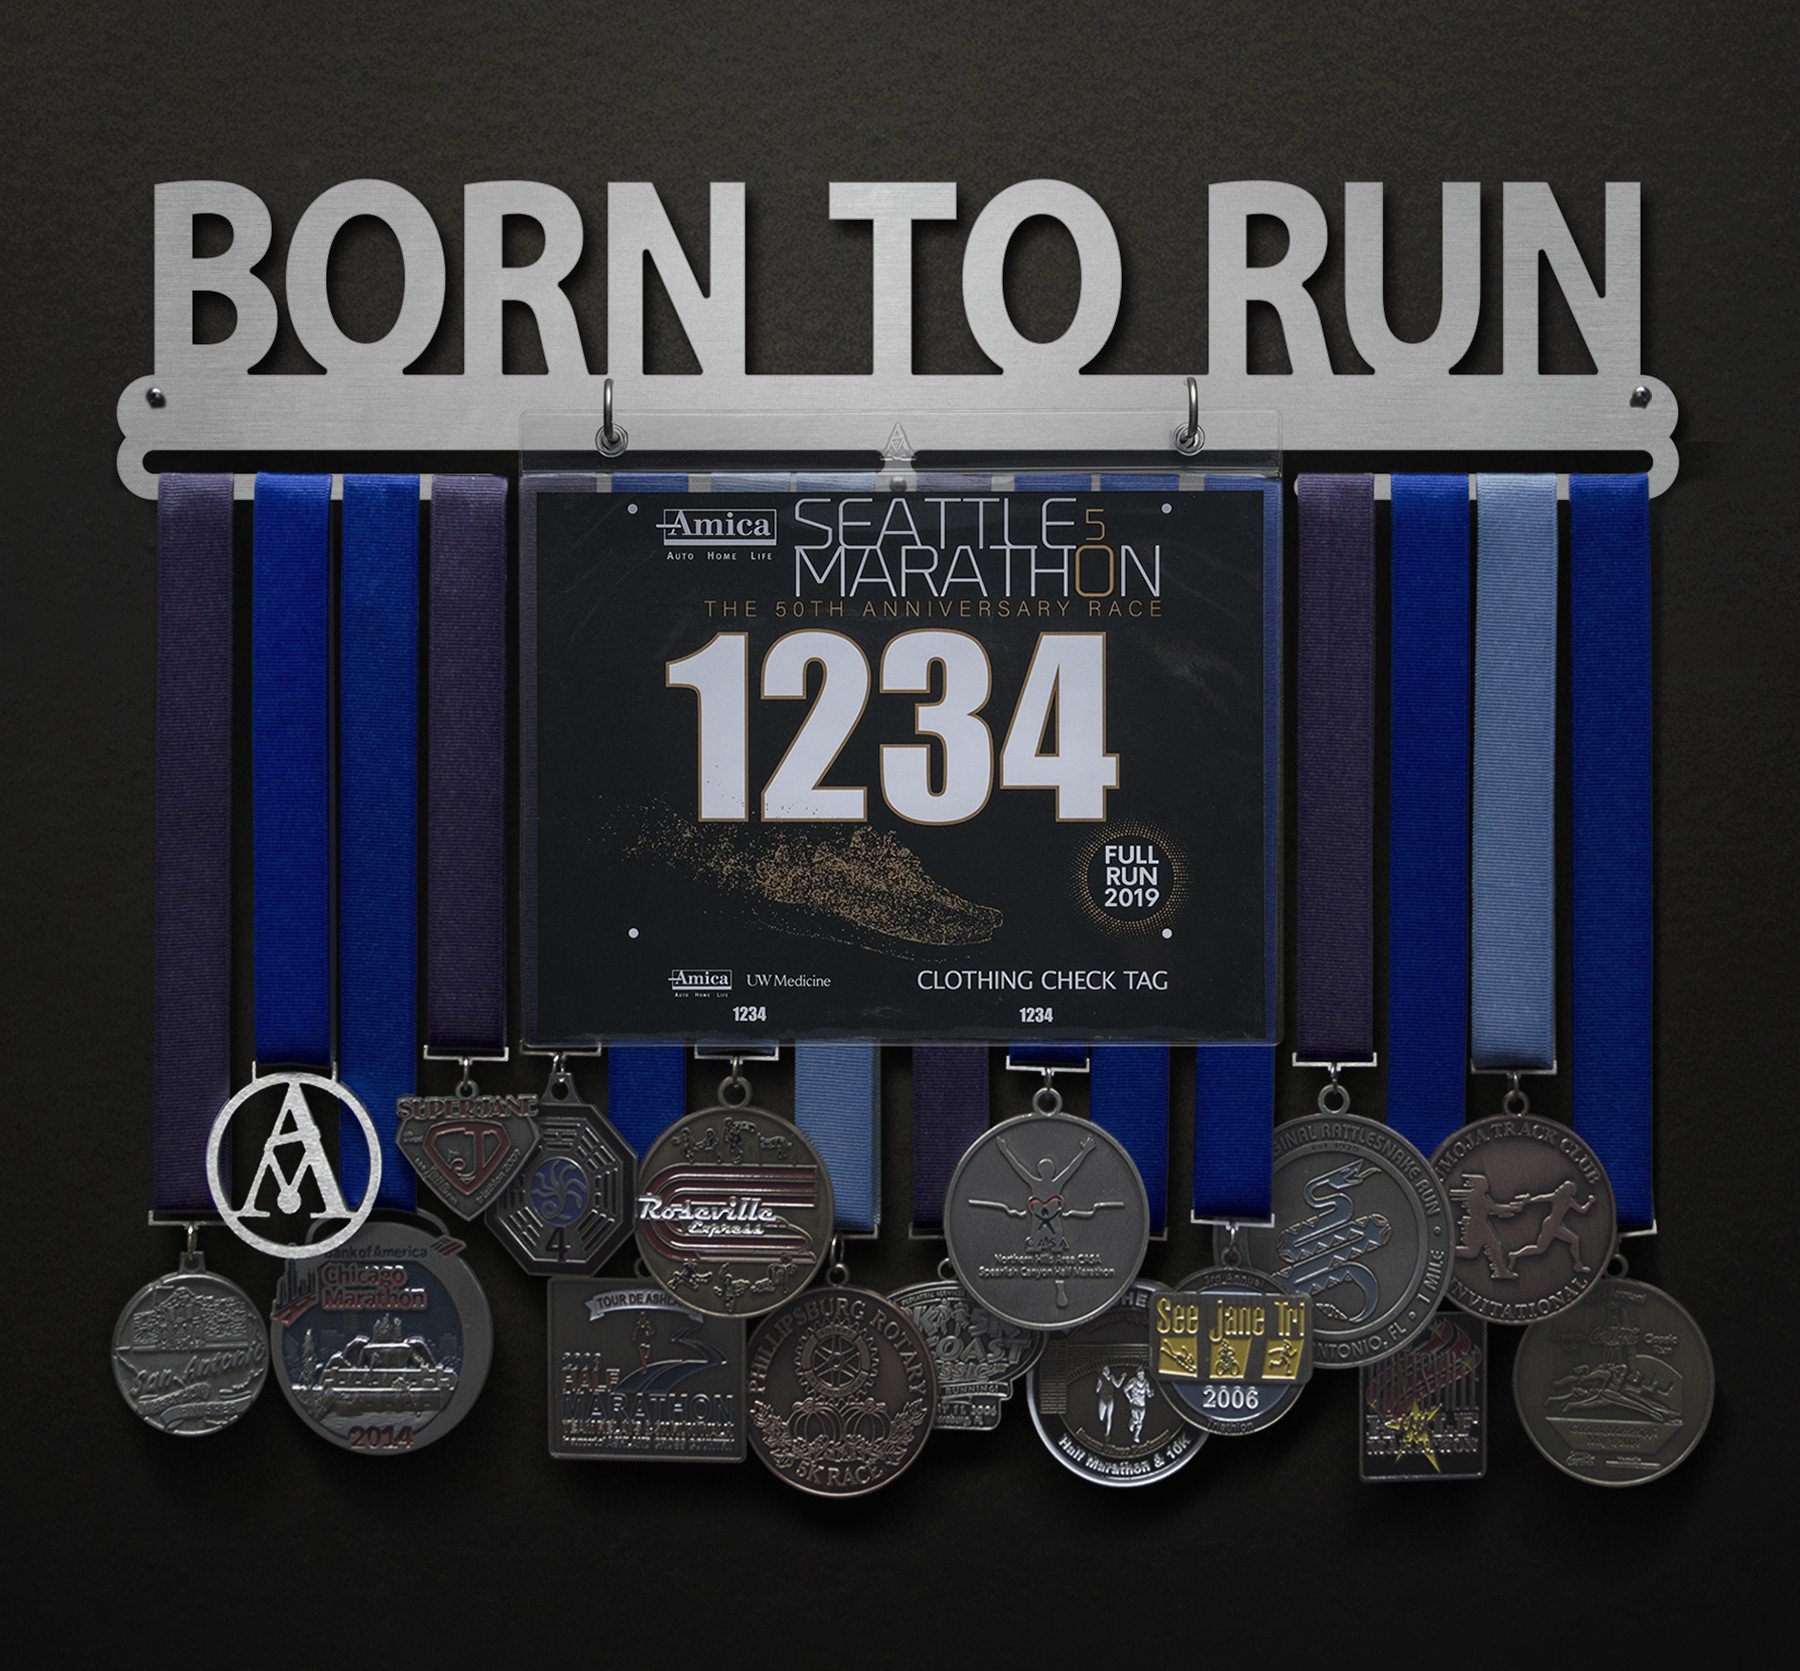 Born To Run Bib and Medal Display